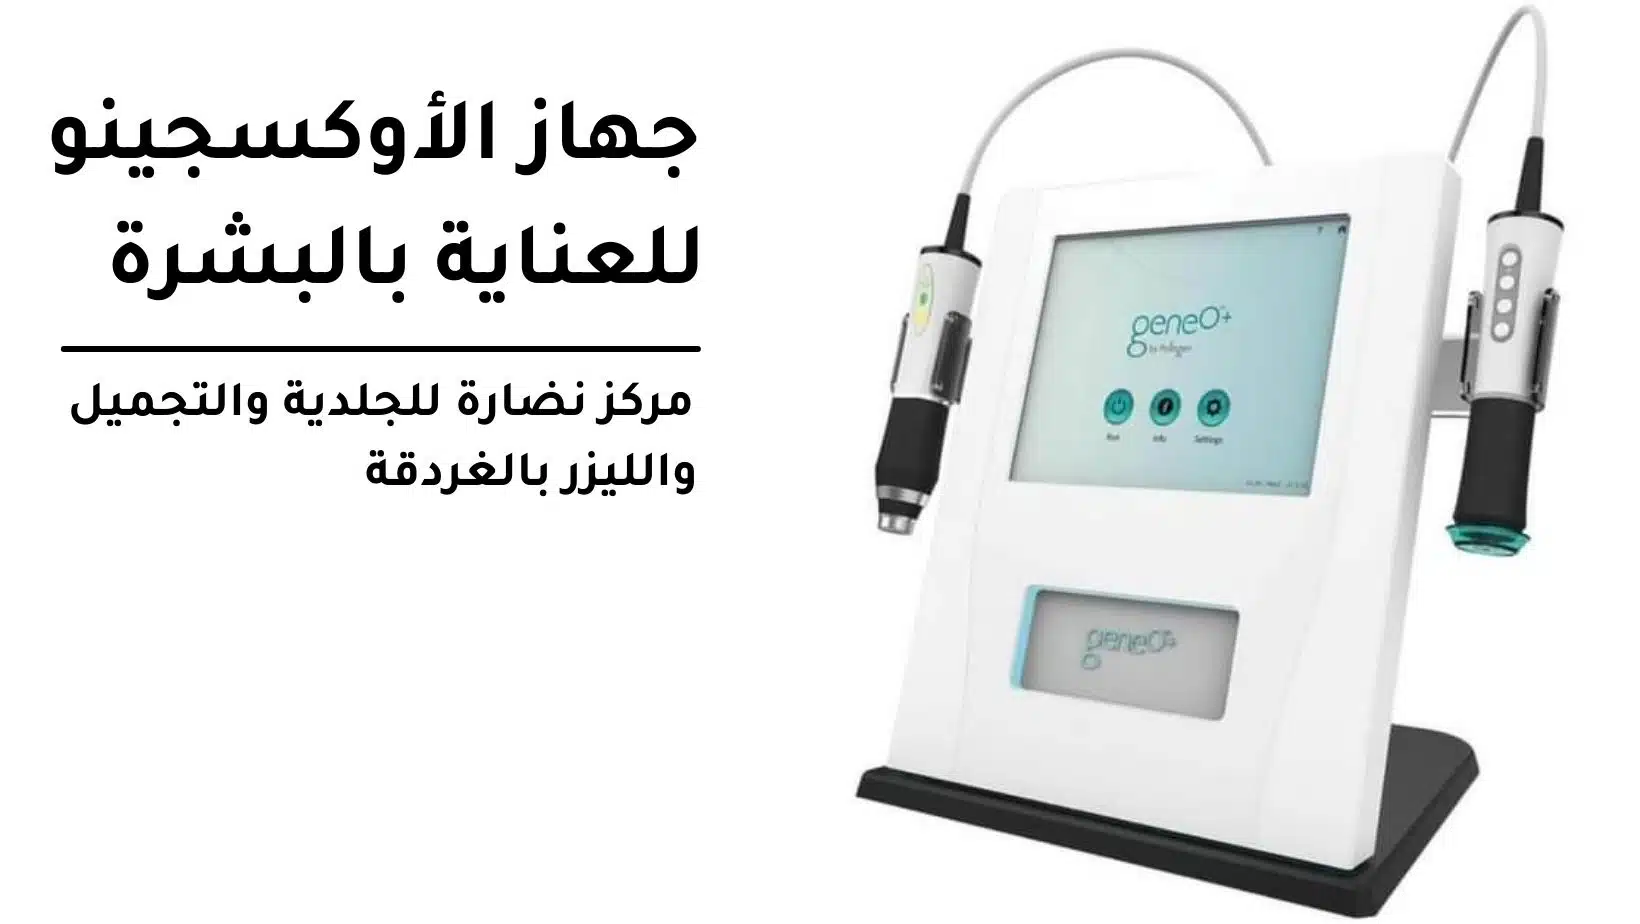 OxyGeneo skin care device